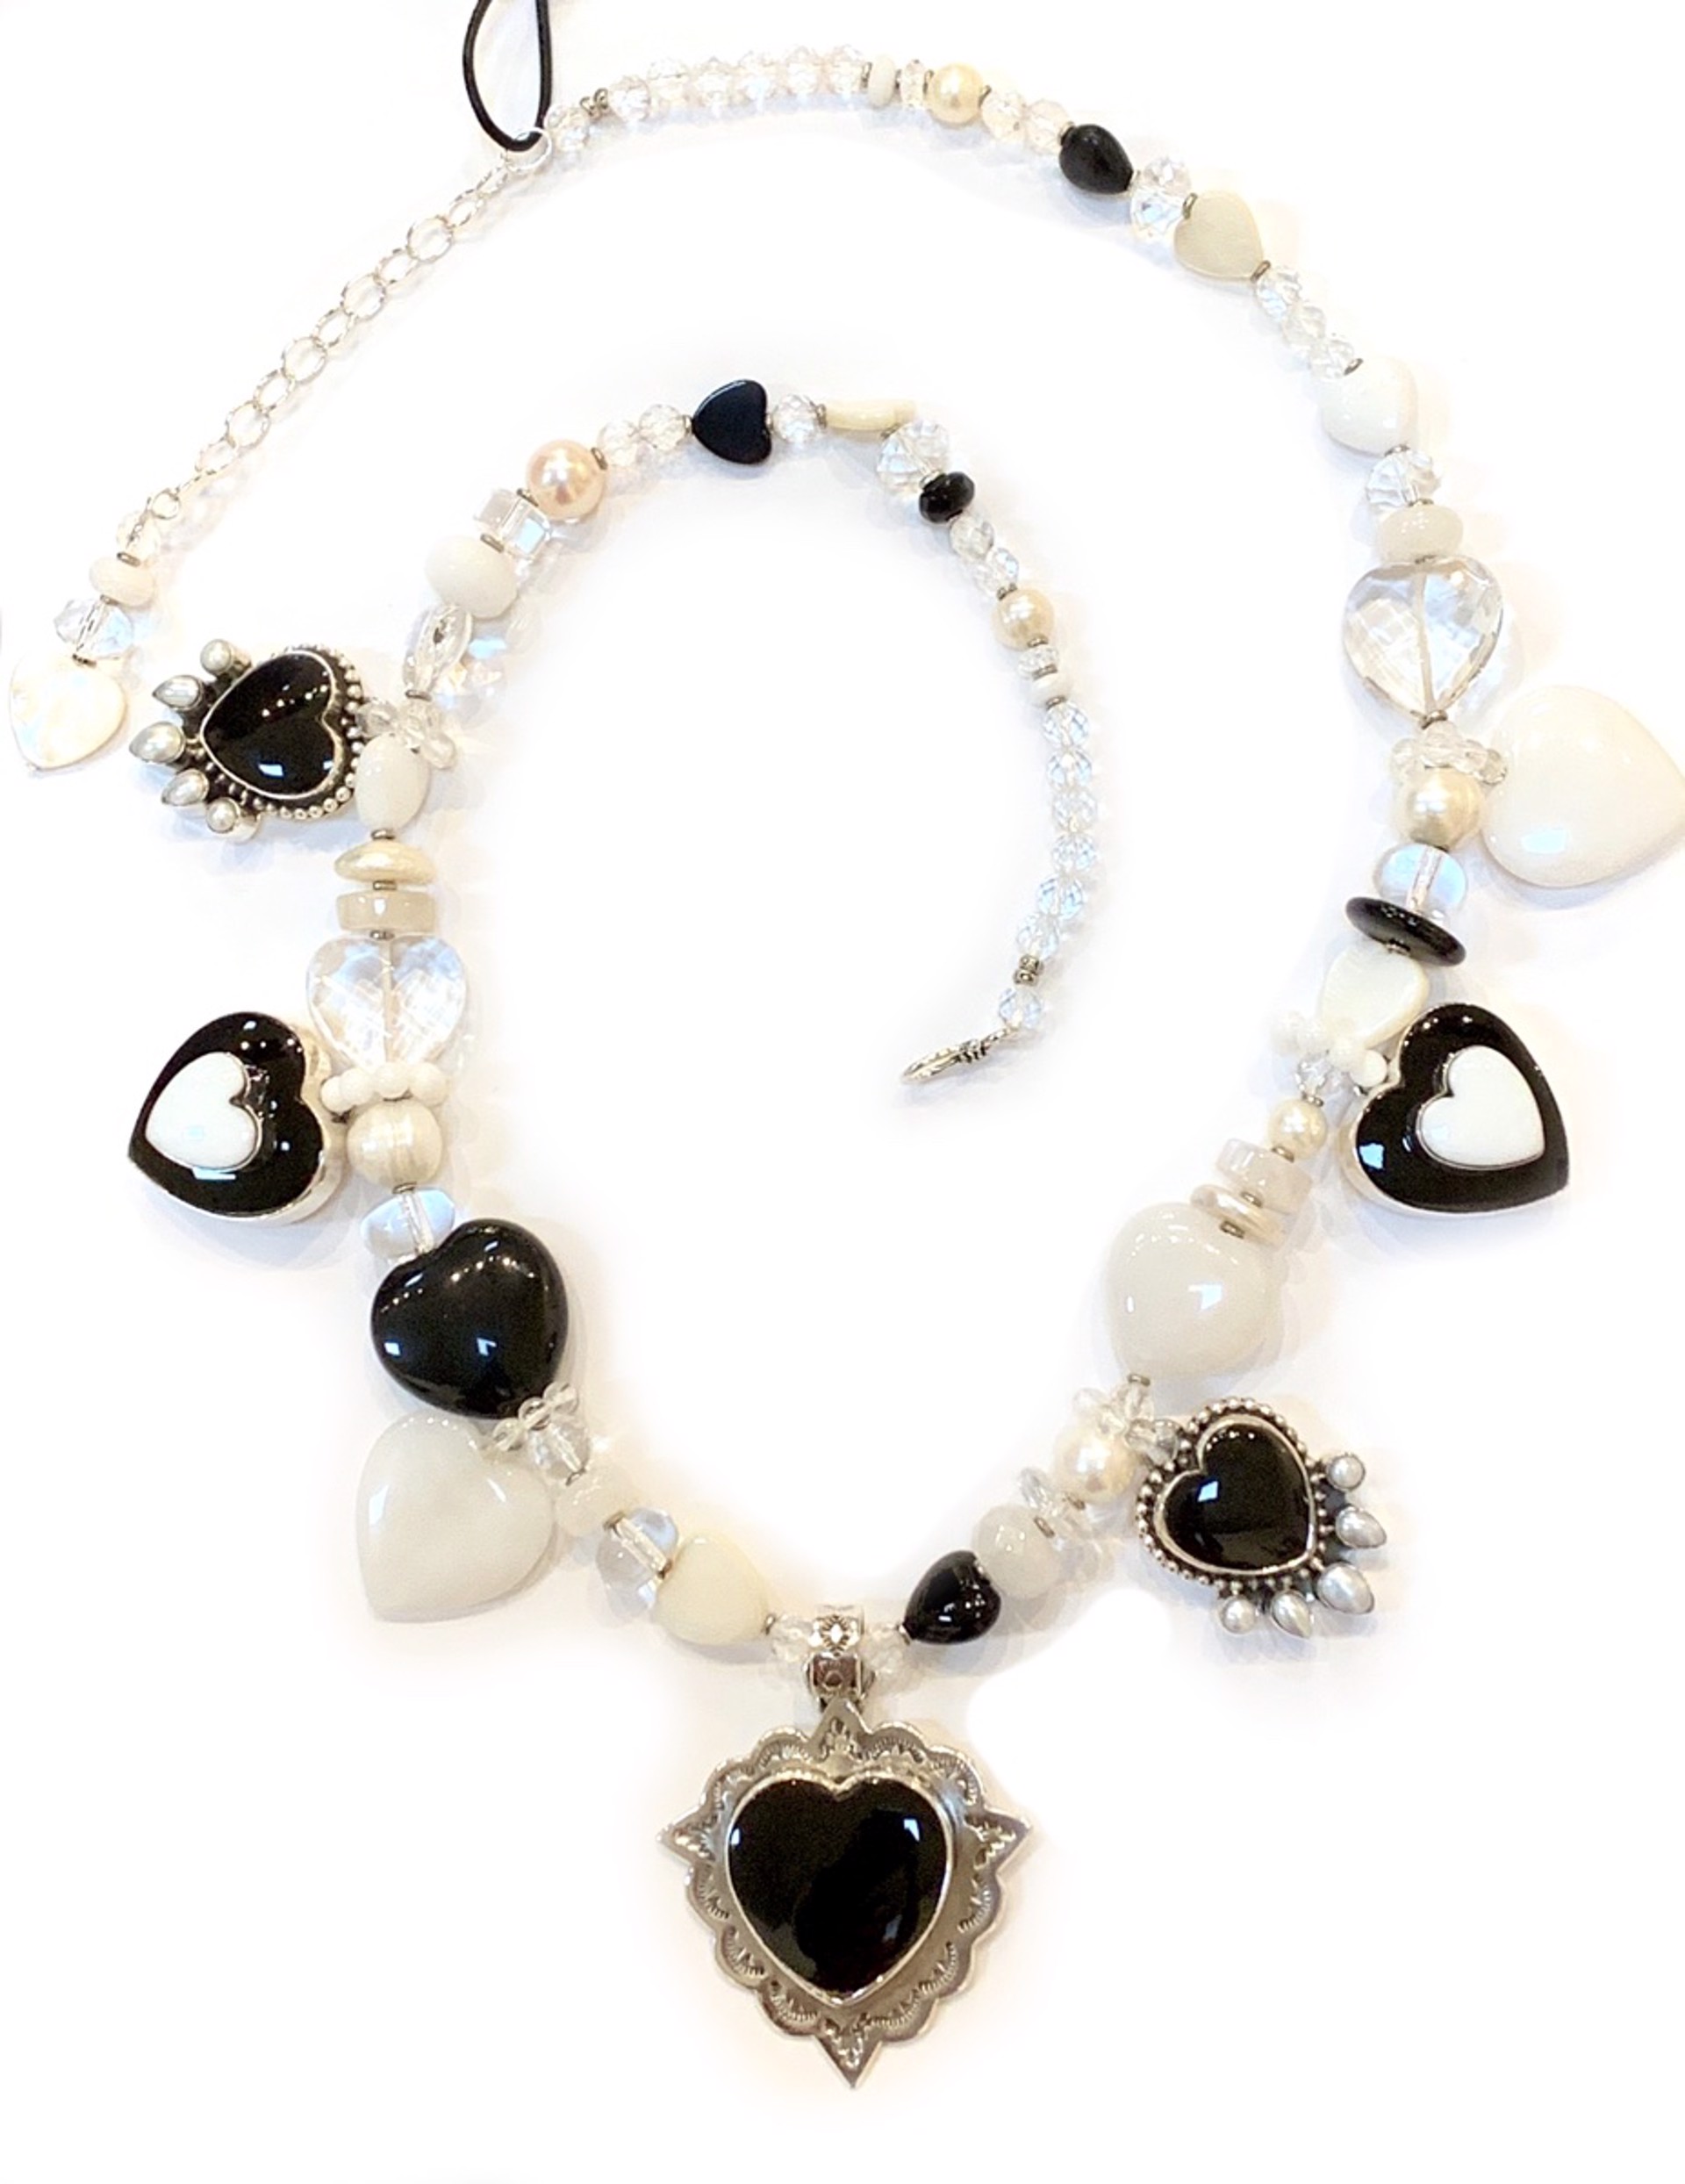 KY 1329-Single strand w black onyx, rock crystal, fresh water pearls by Kim Yubeta